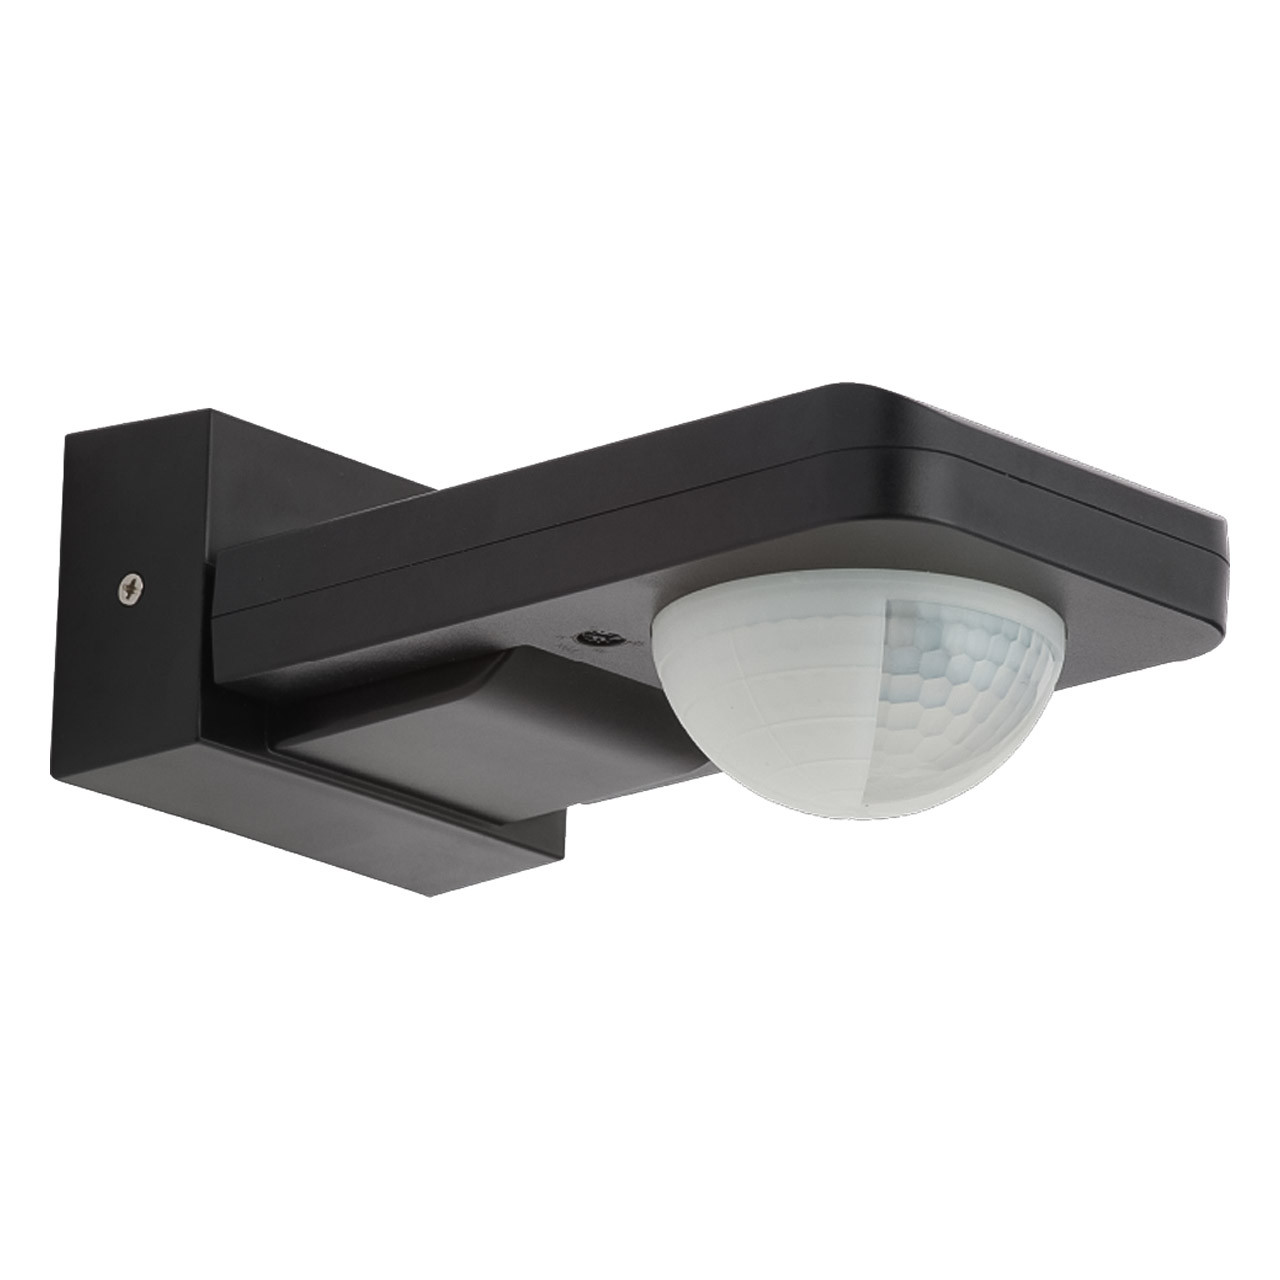 Photos - Floodlight / Street Light Zink PIR Sensor Adjustable Wall 360° Napa Black 20-Metre Range ZN-35691-BL